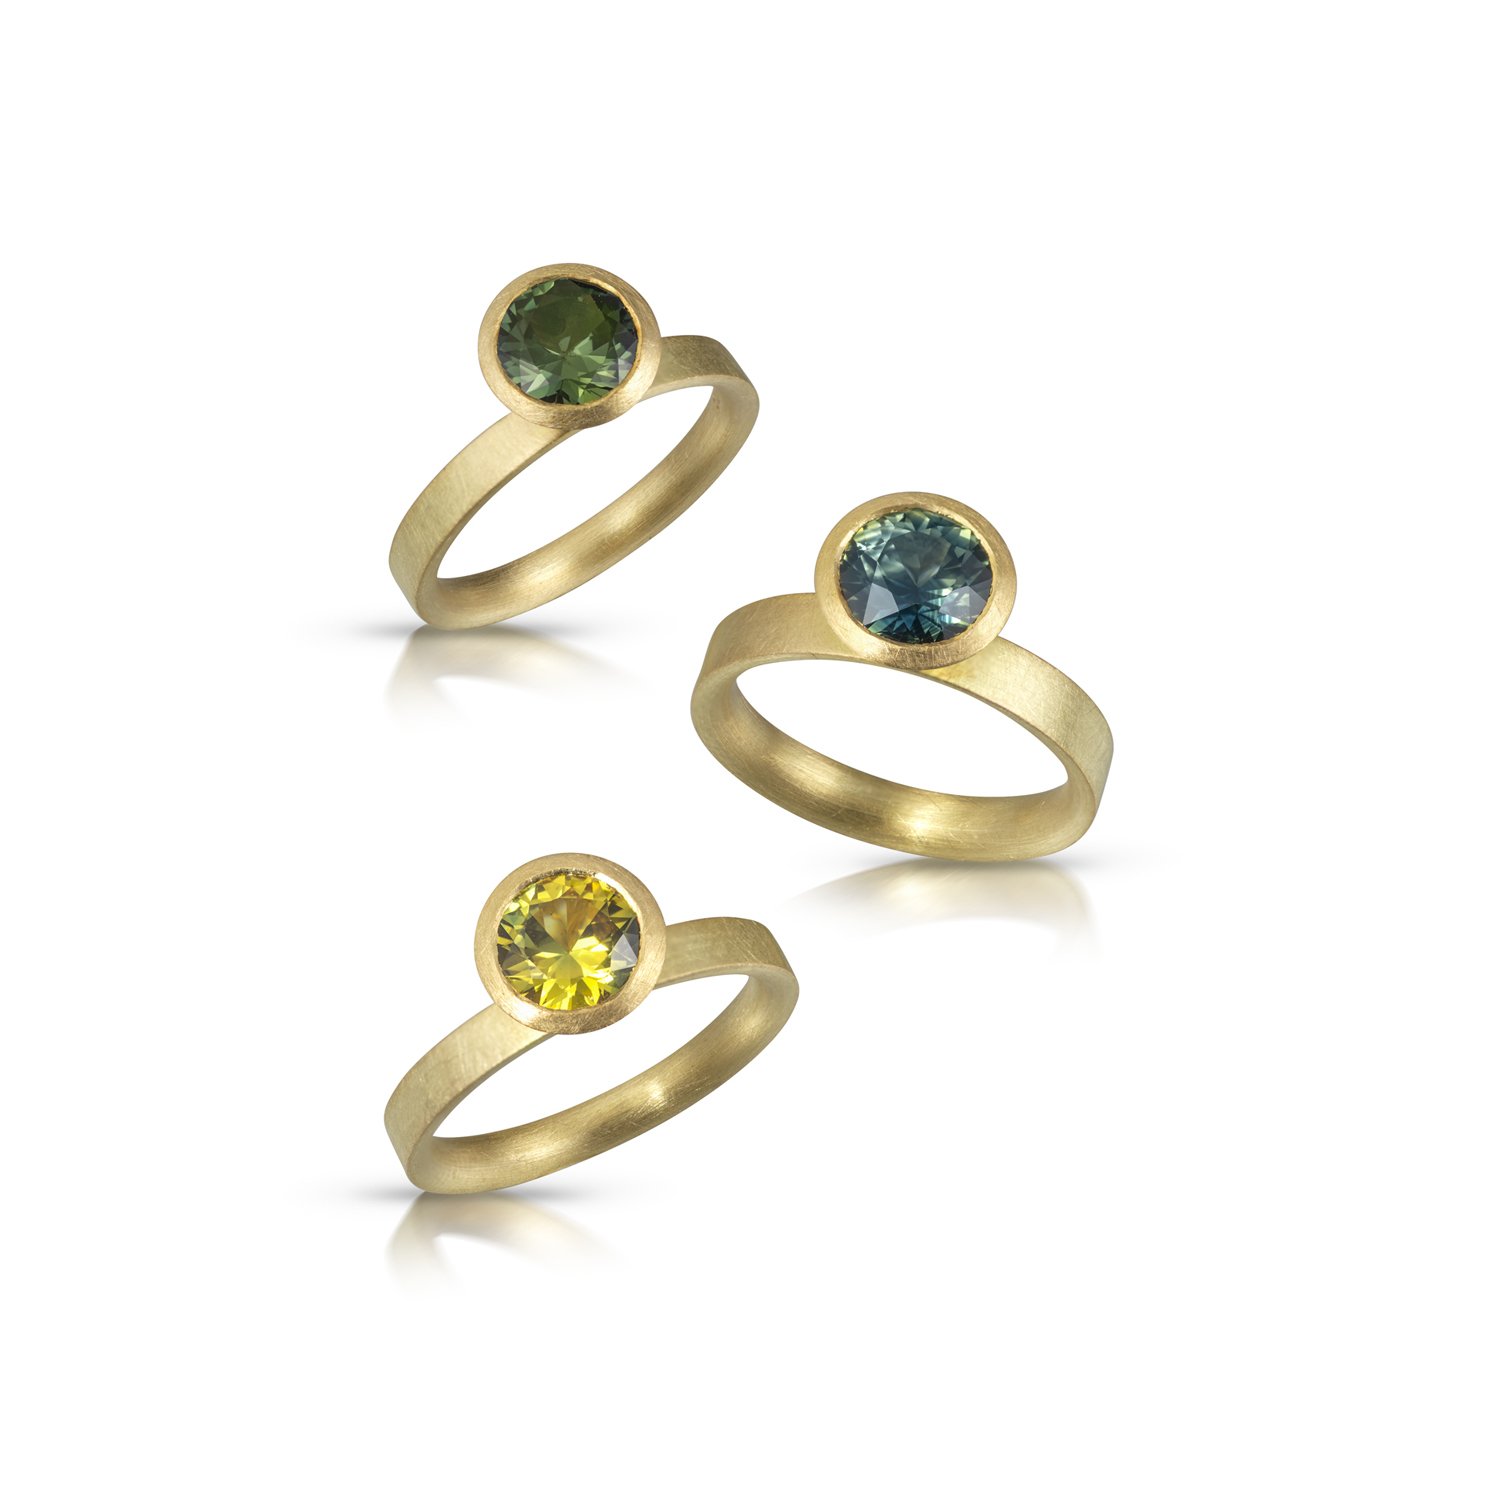 Green Yellow Teal Australian Sapphire Rings 18ct gold engagement wedding